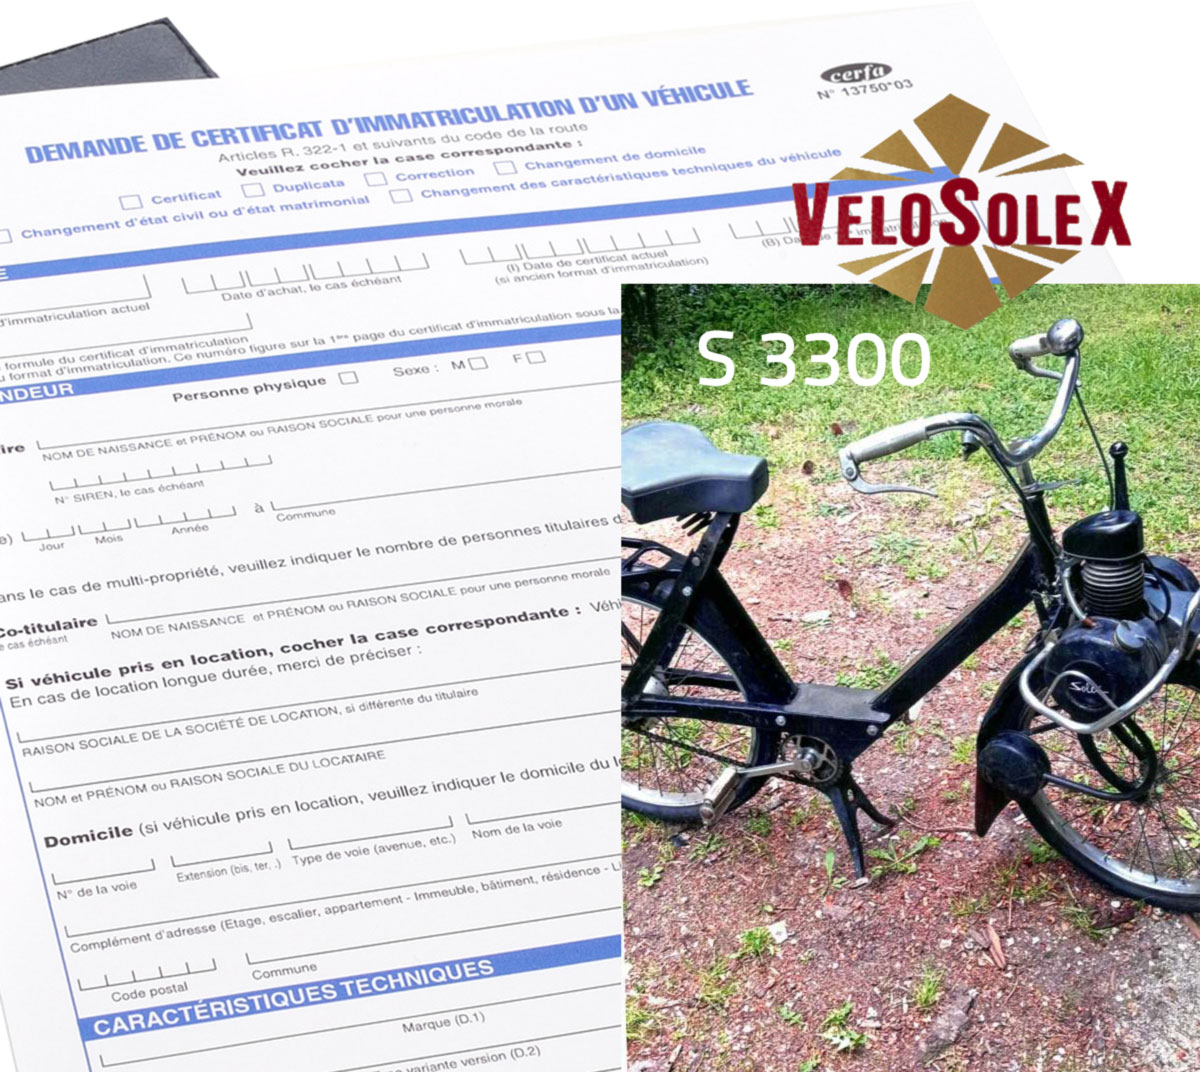 Demande de Certificat d'immatriculation pour Velosolex 3300